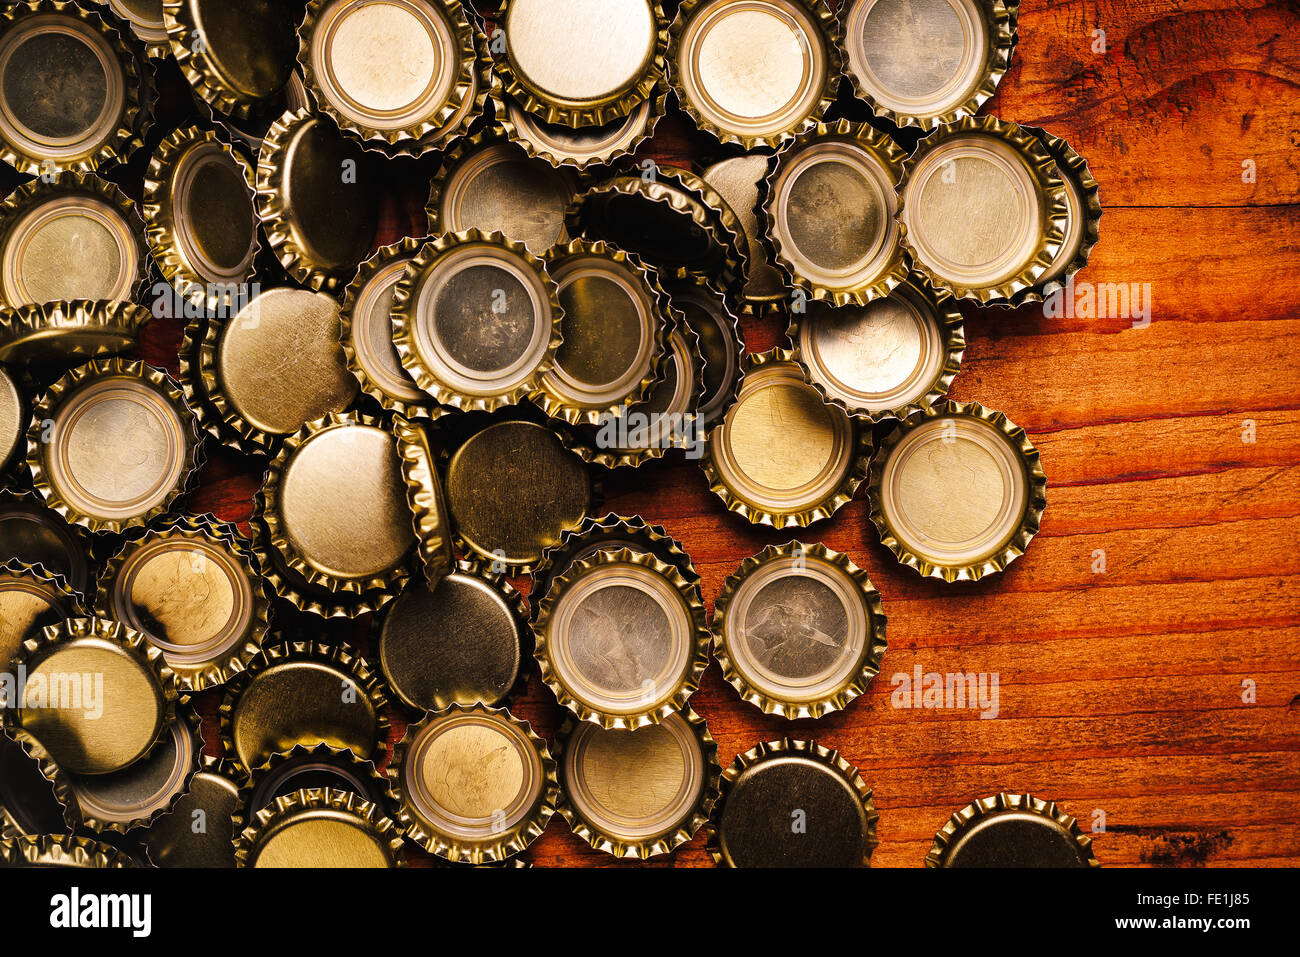 Large pile of beer bottle caps on rustic oak wooden desk Stock Photo